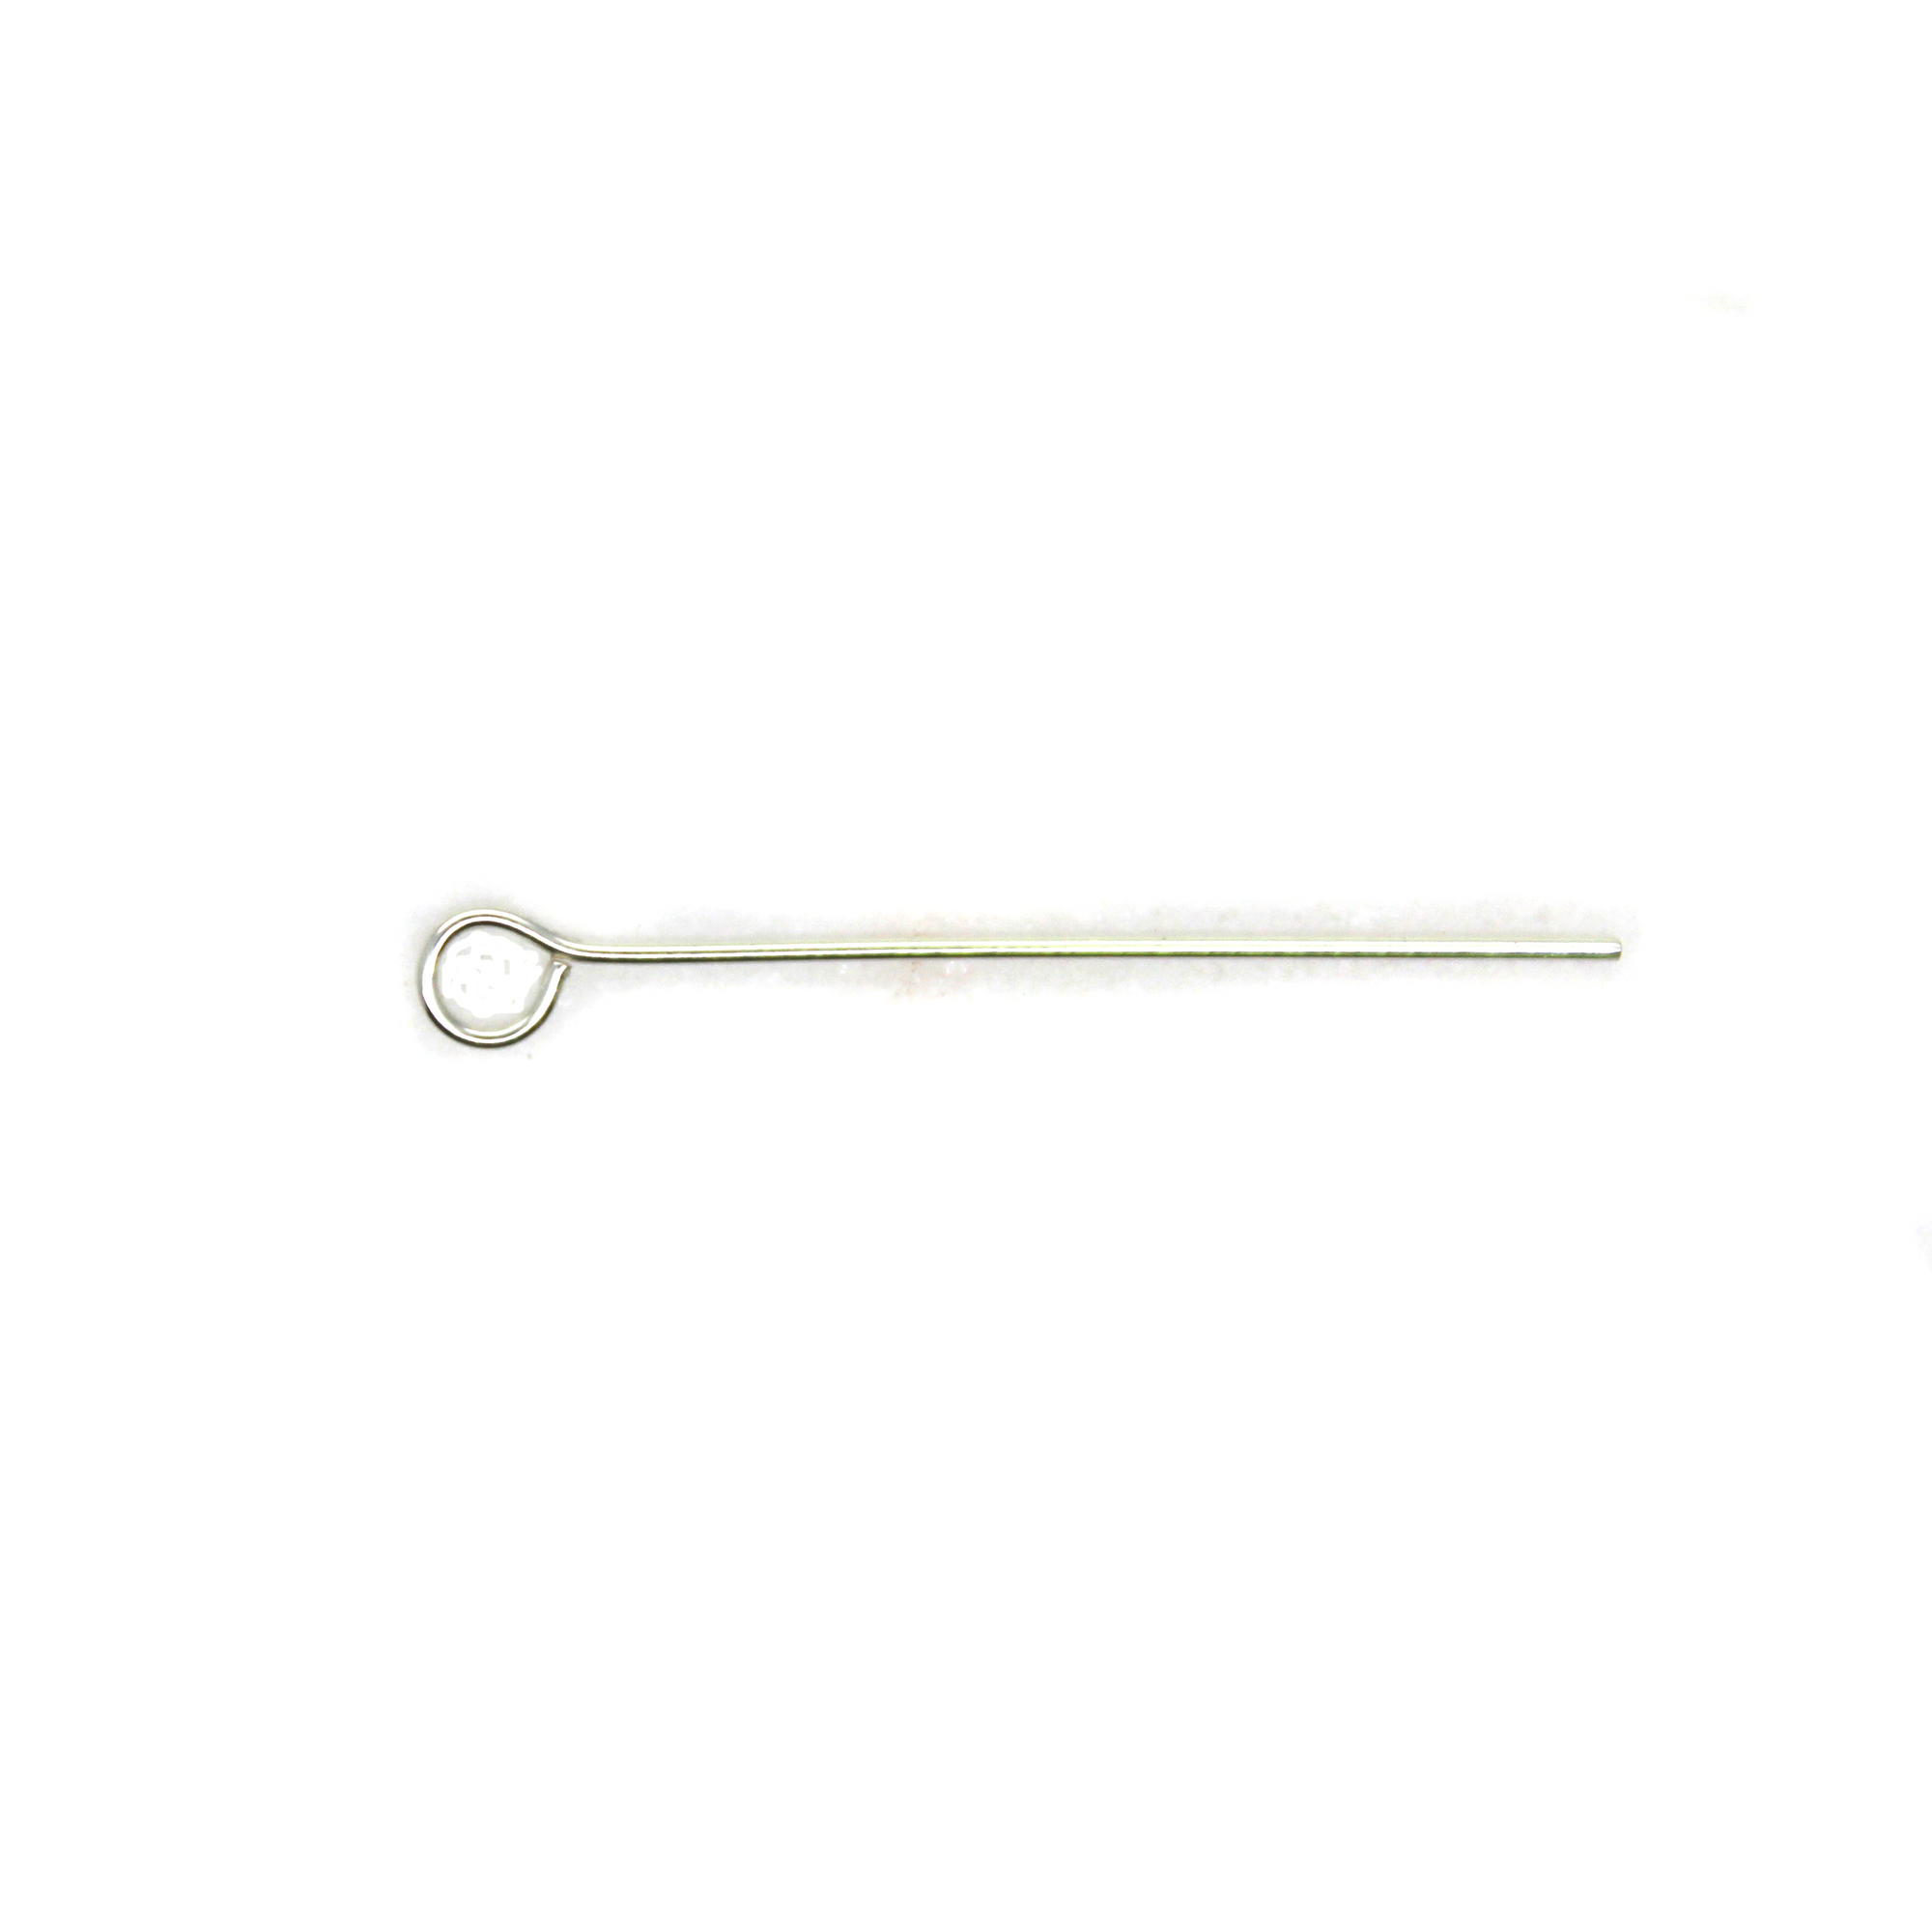 Eye Pin, Sterling Silver, 1 inch Length, 30ga - 4pcs